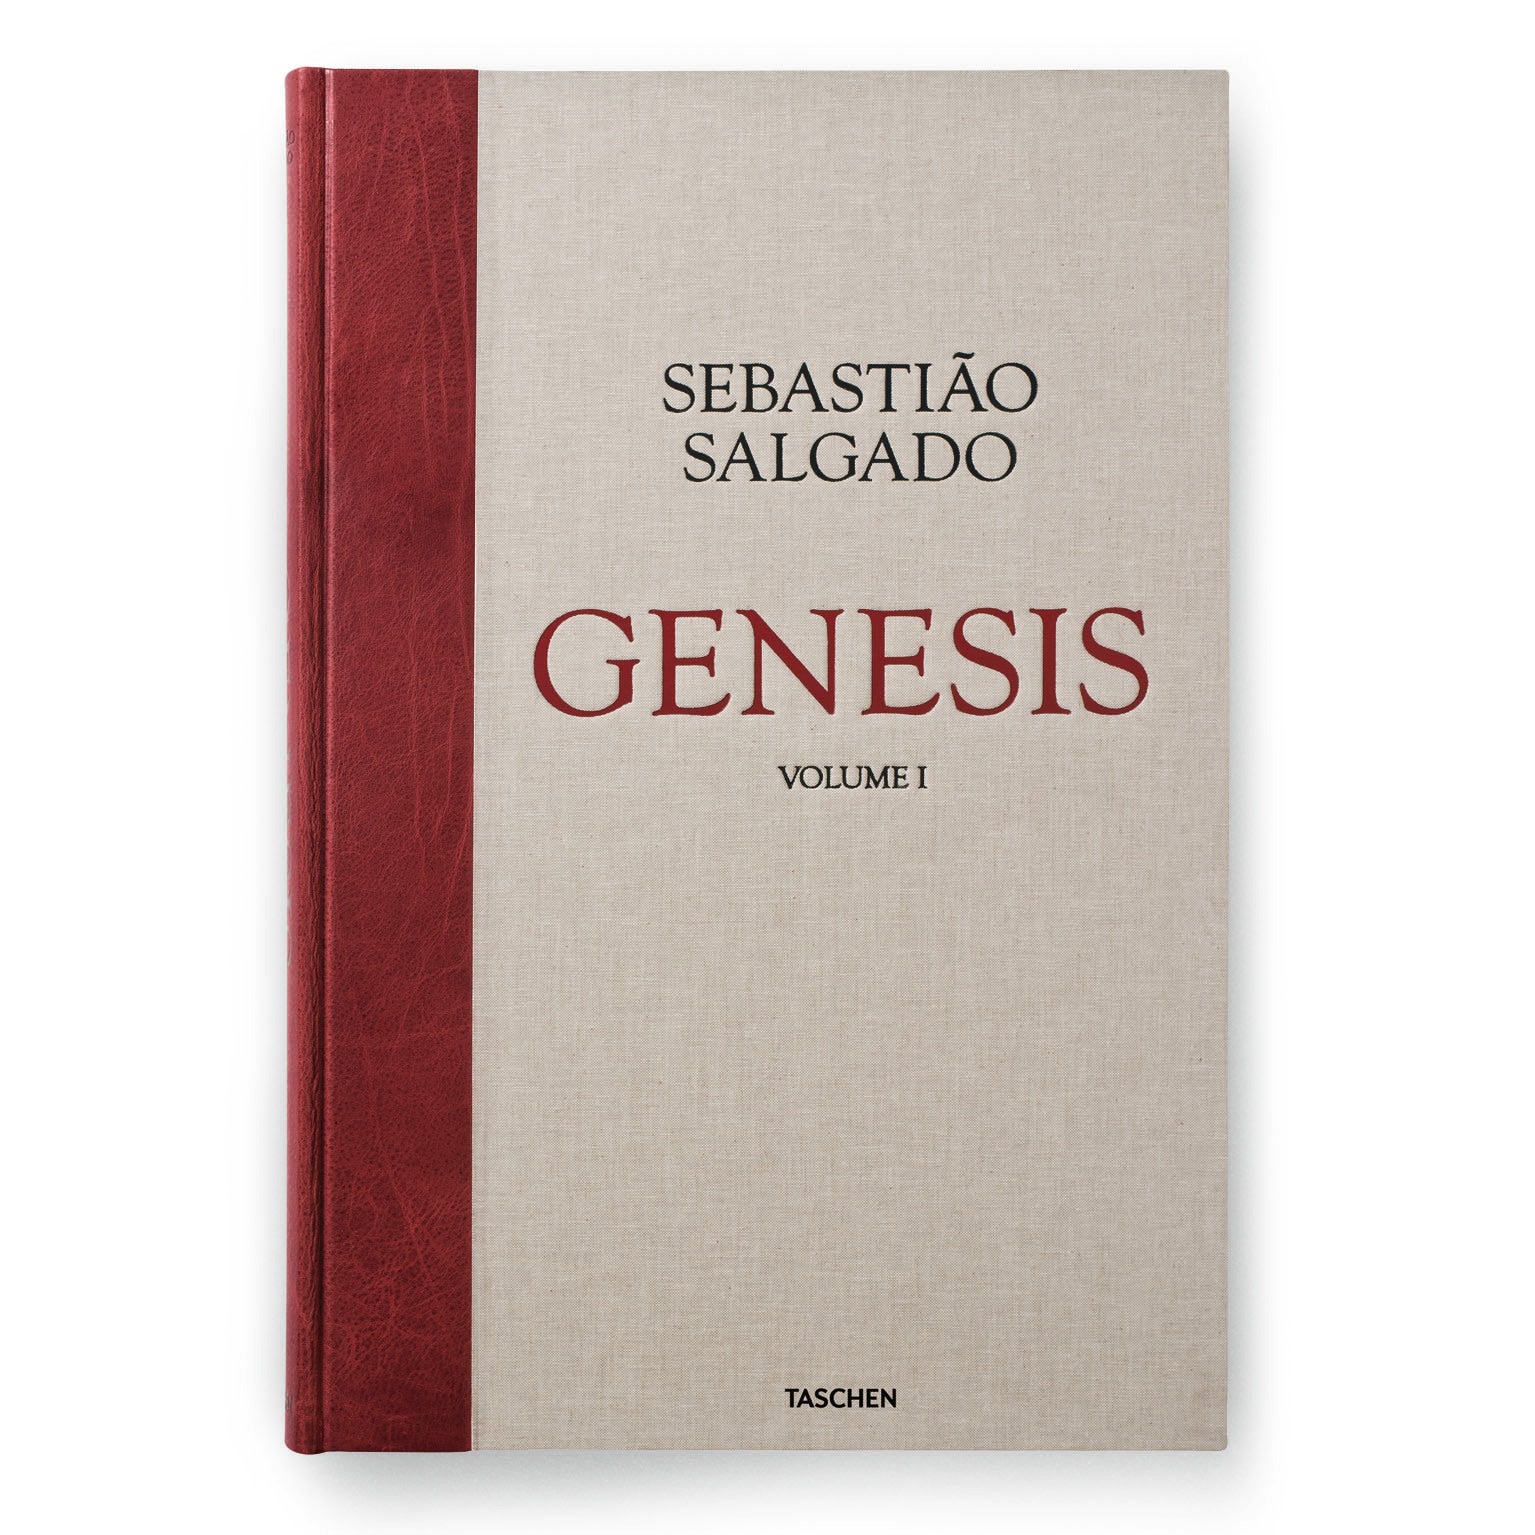 Sebastião Salgado "GENESIS" Signed, Limited Edition SUMO Book, with stand